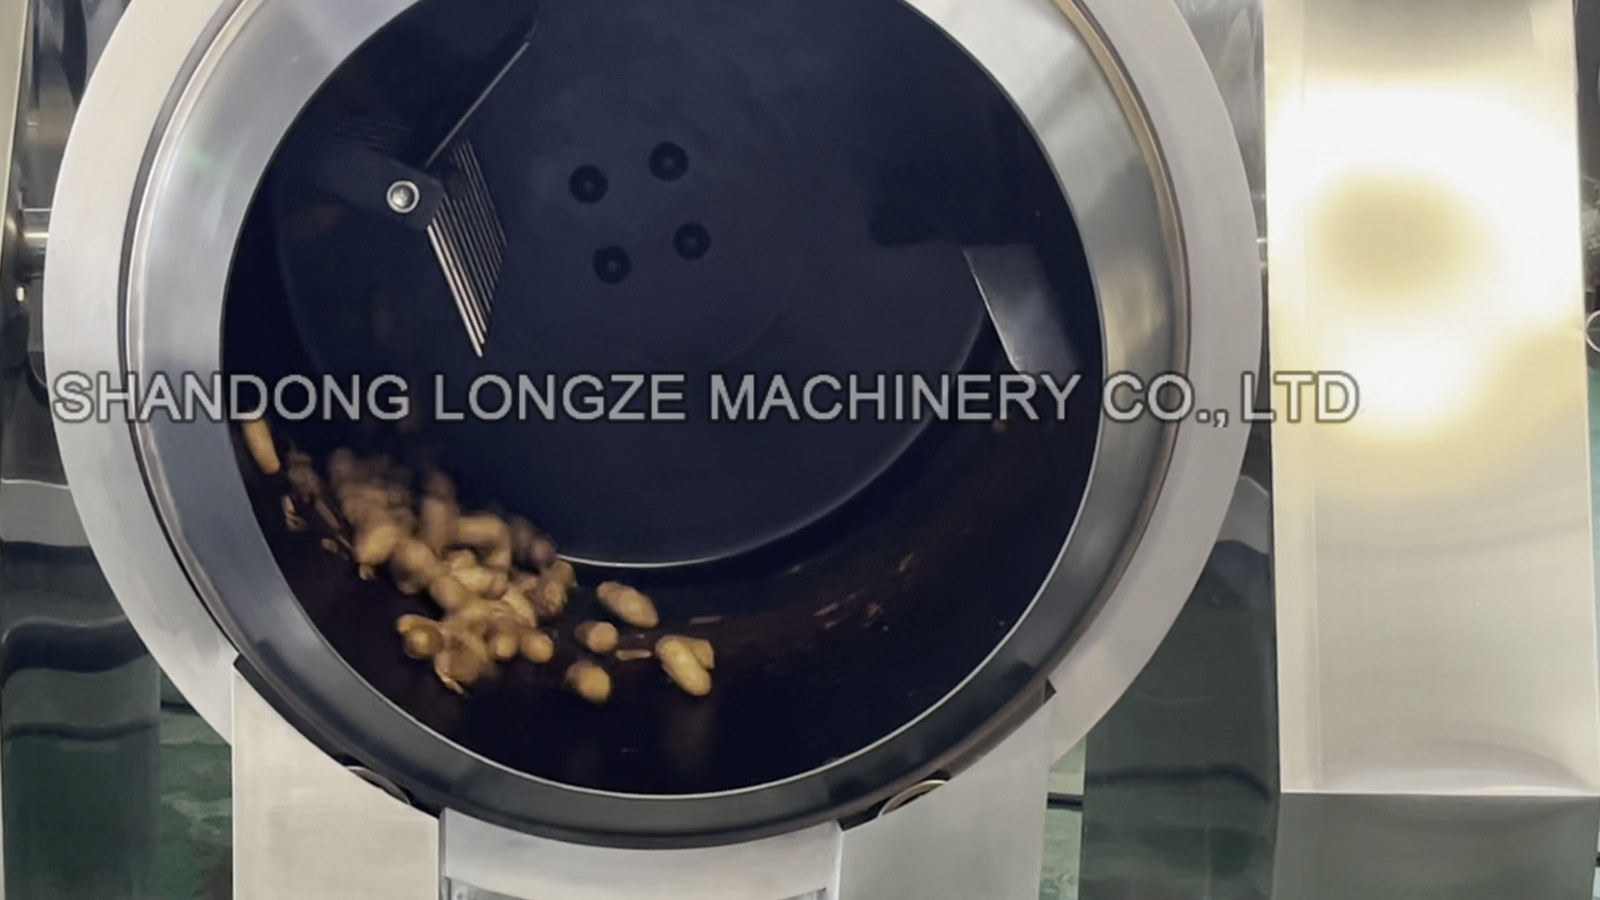 Automatic Intelligent Cooking Robot Machine